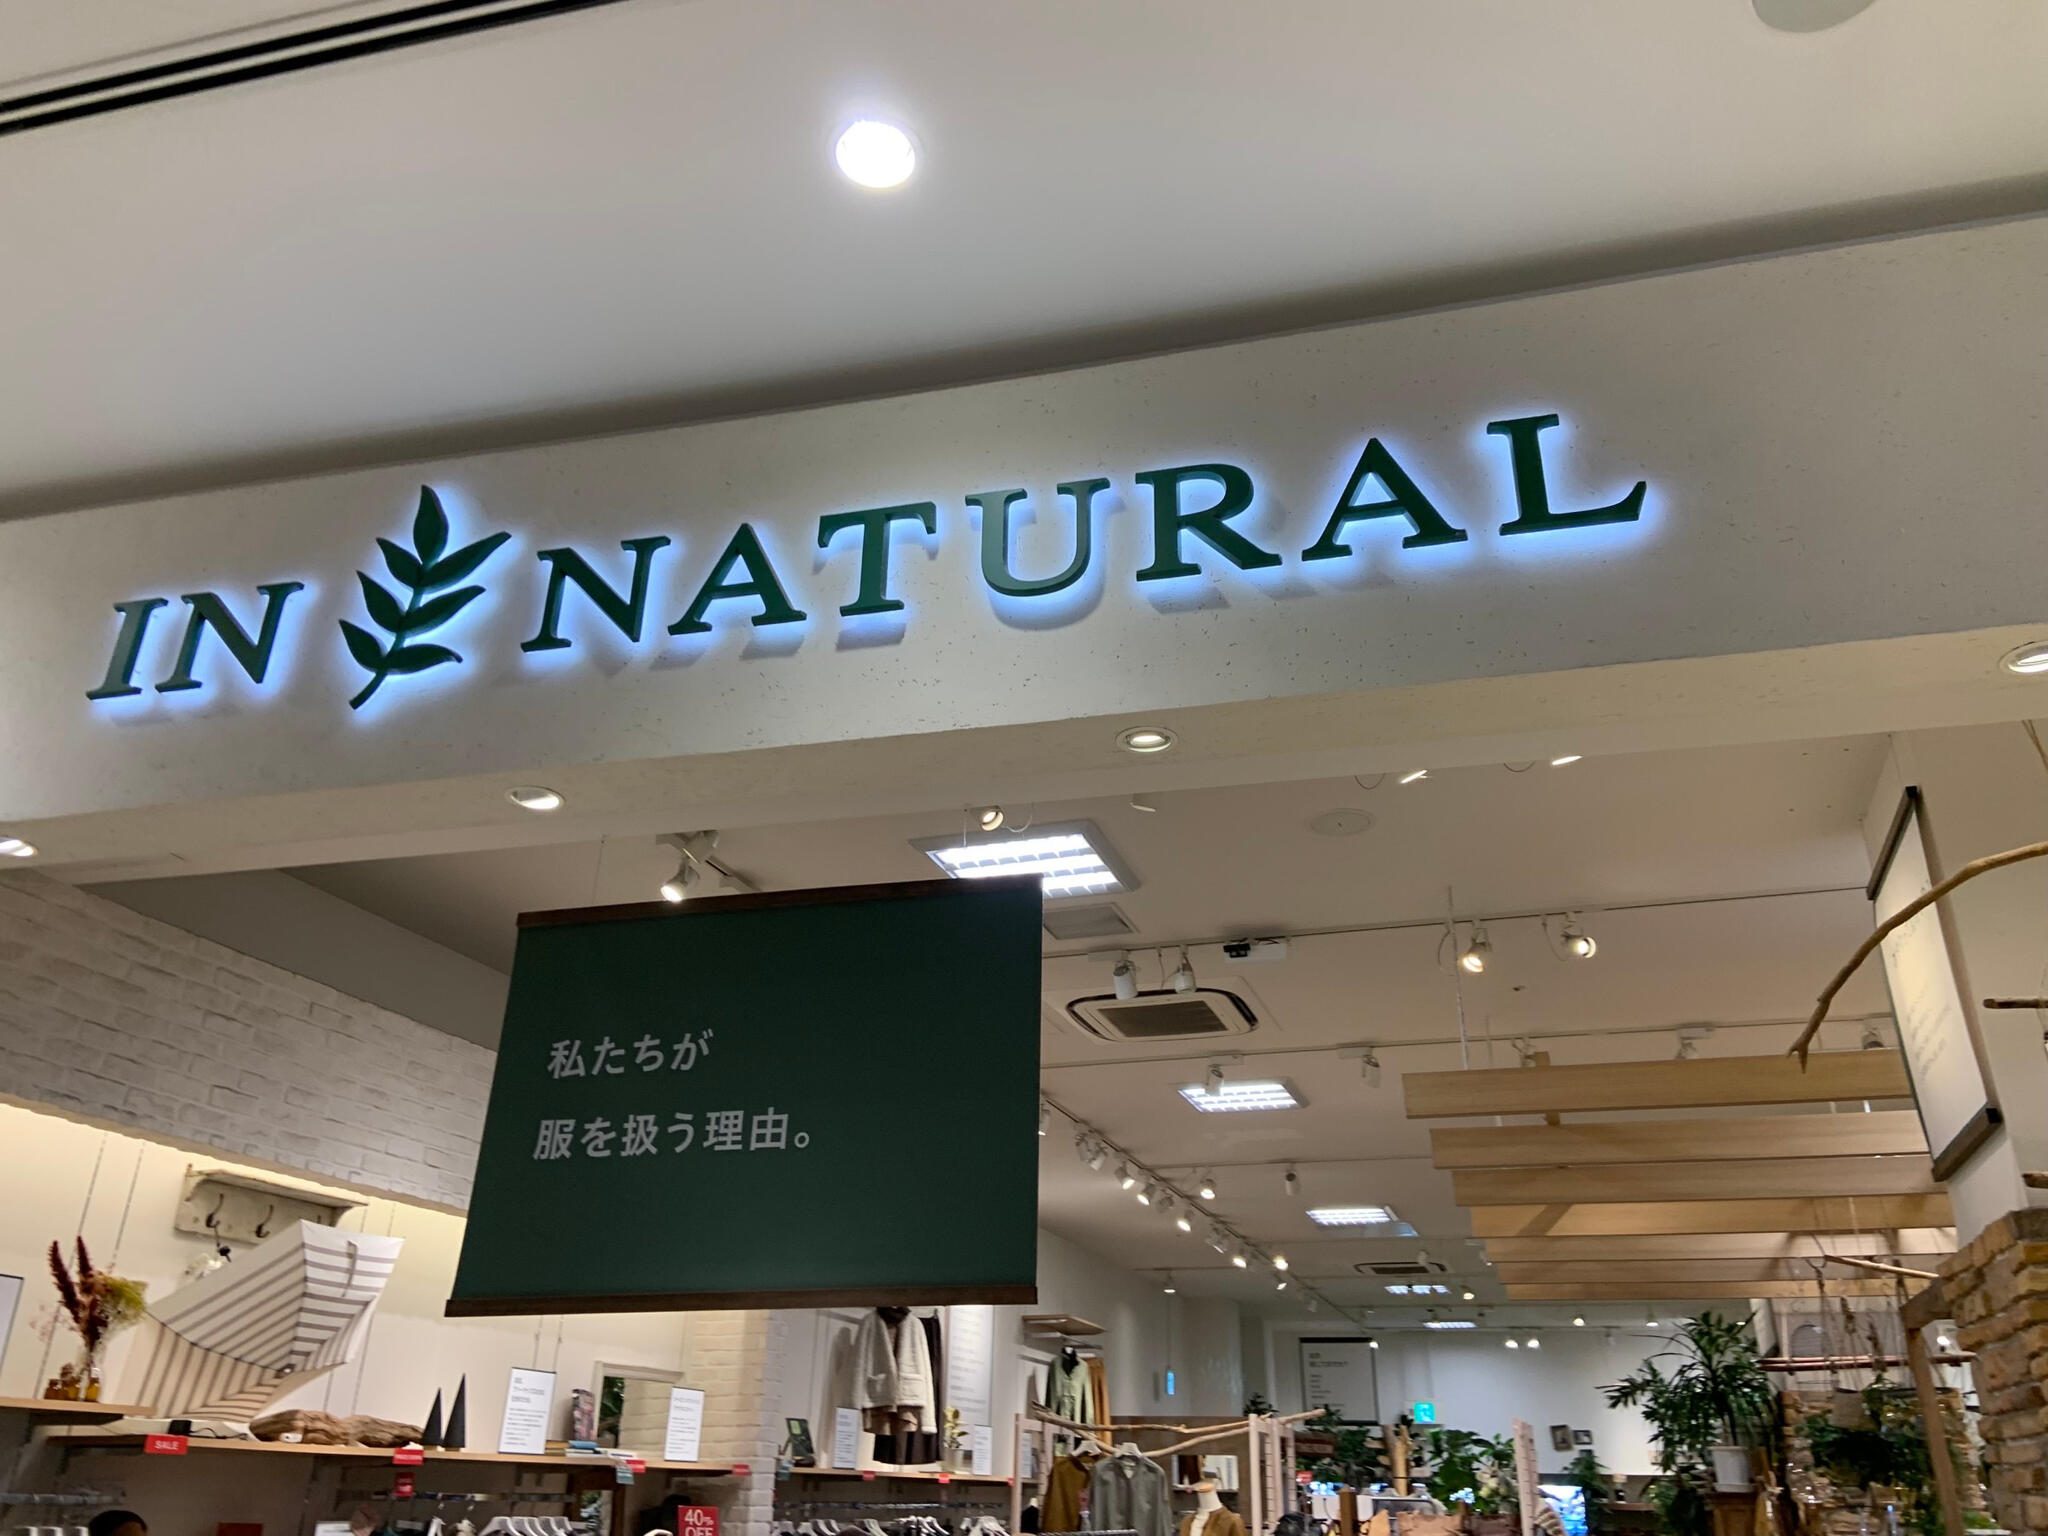 IN NATURAL ららぽーと富士見店の代表写真7